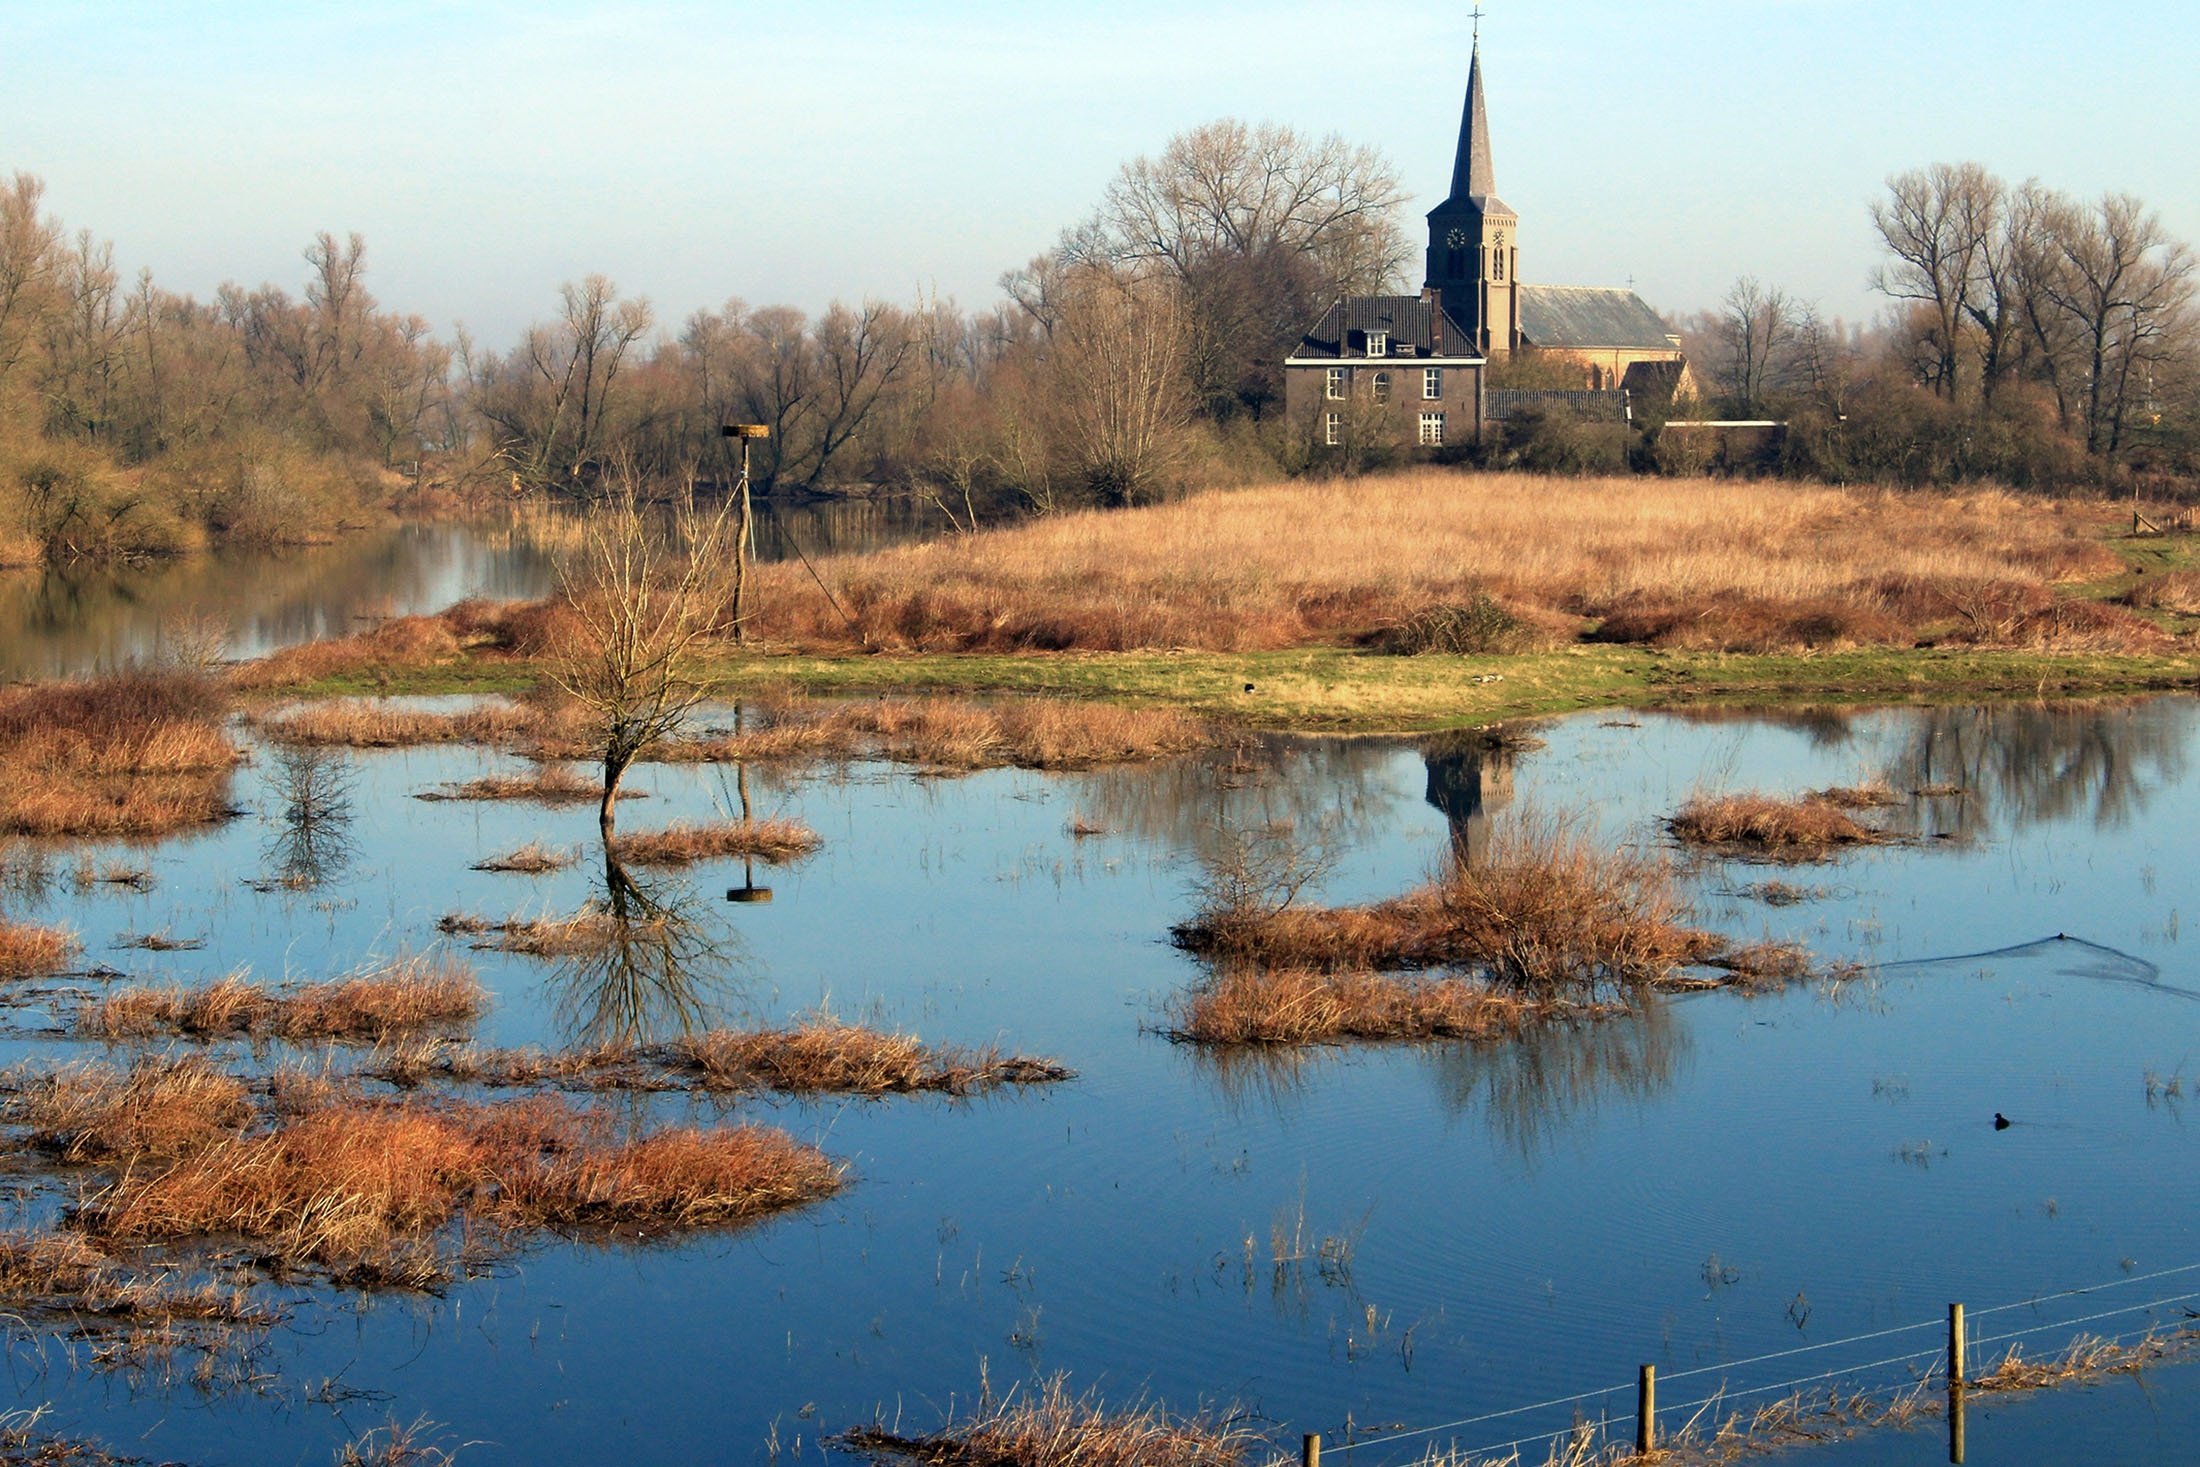 The Millingerwaard is characterized by rugged floodplain landscapes. (dpa Photo)